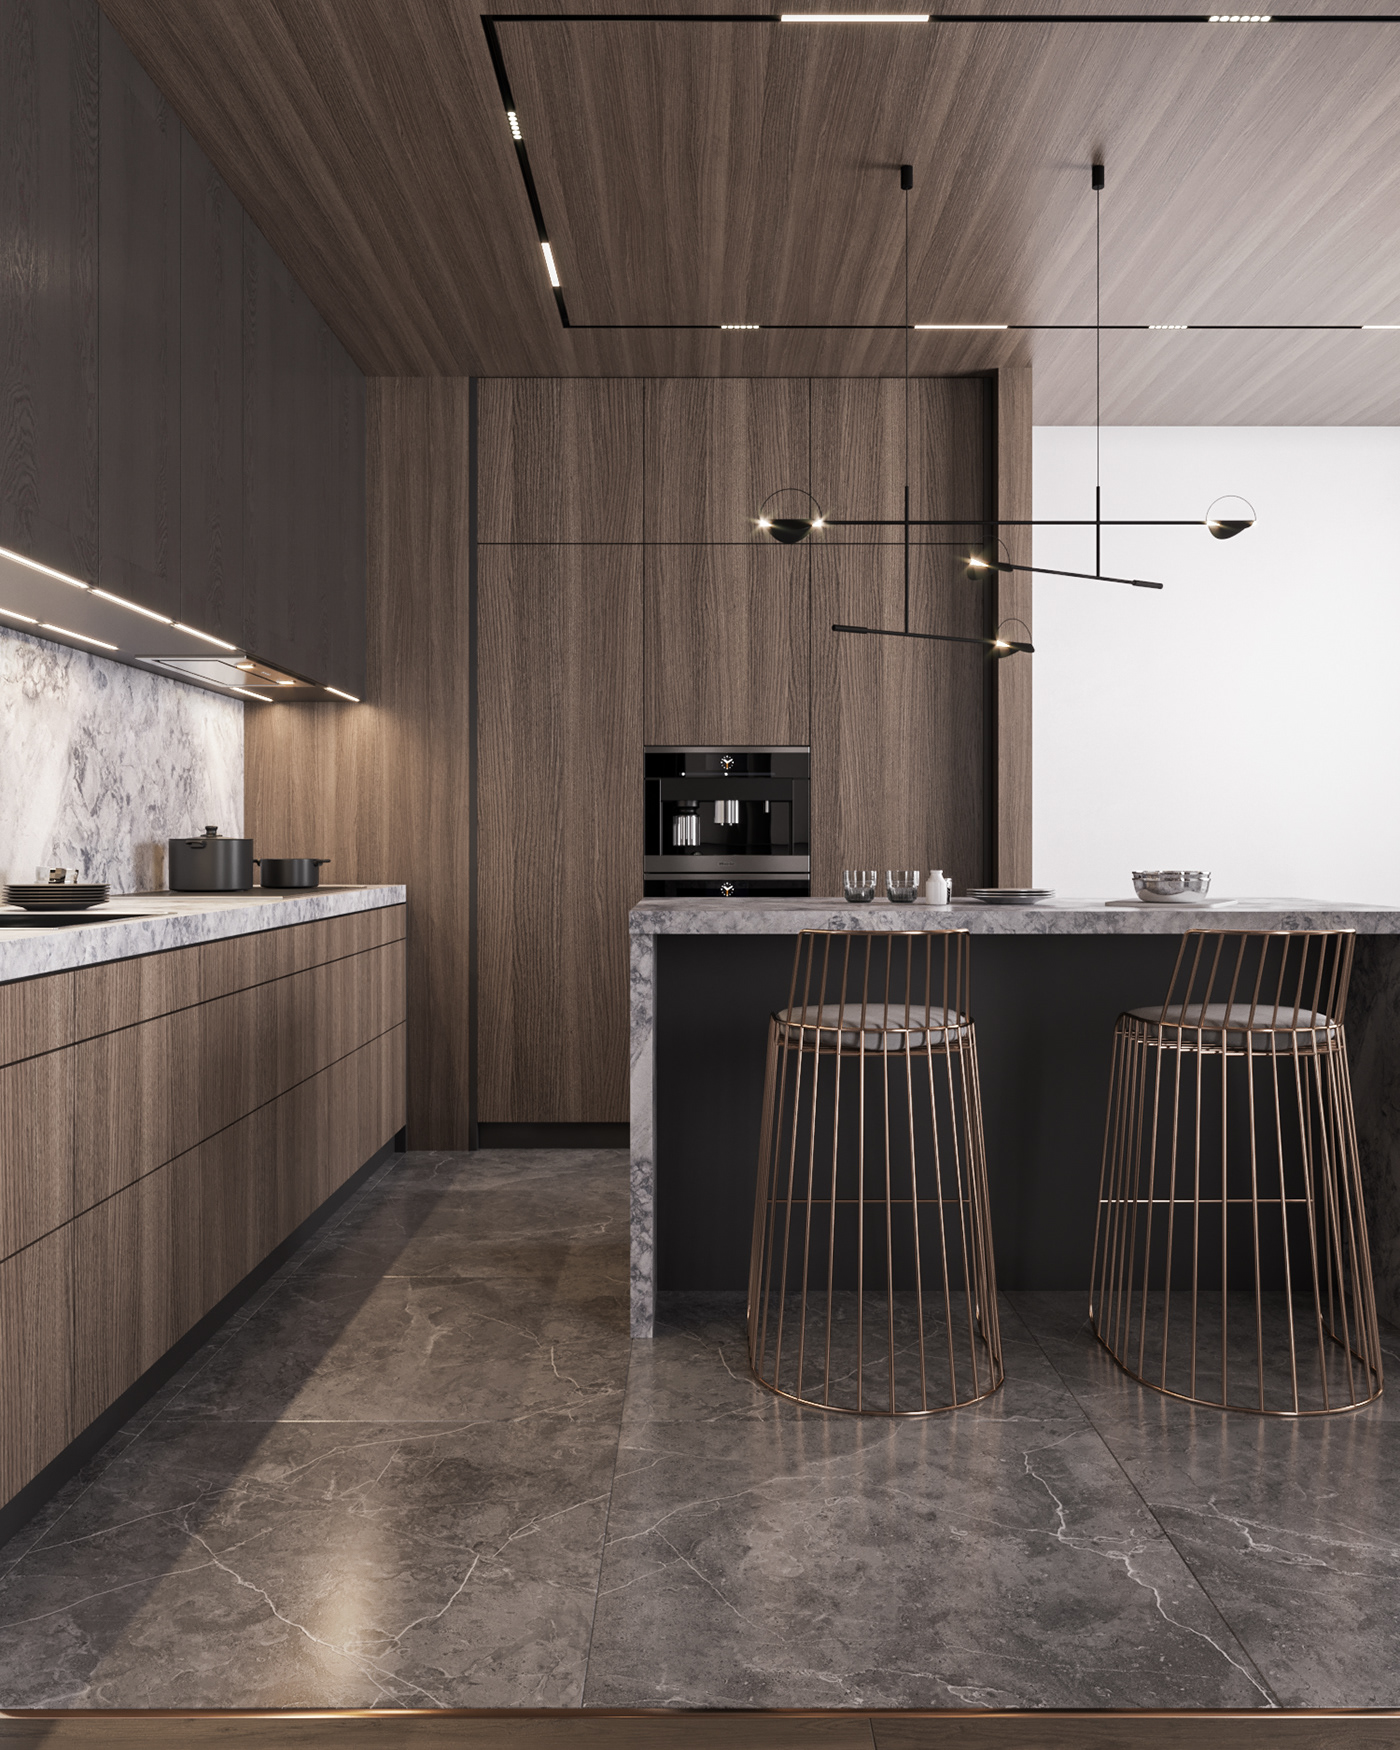 design Moscow 3ds max Interior kitchen living room bedroom bathroom concept graphics